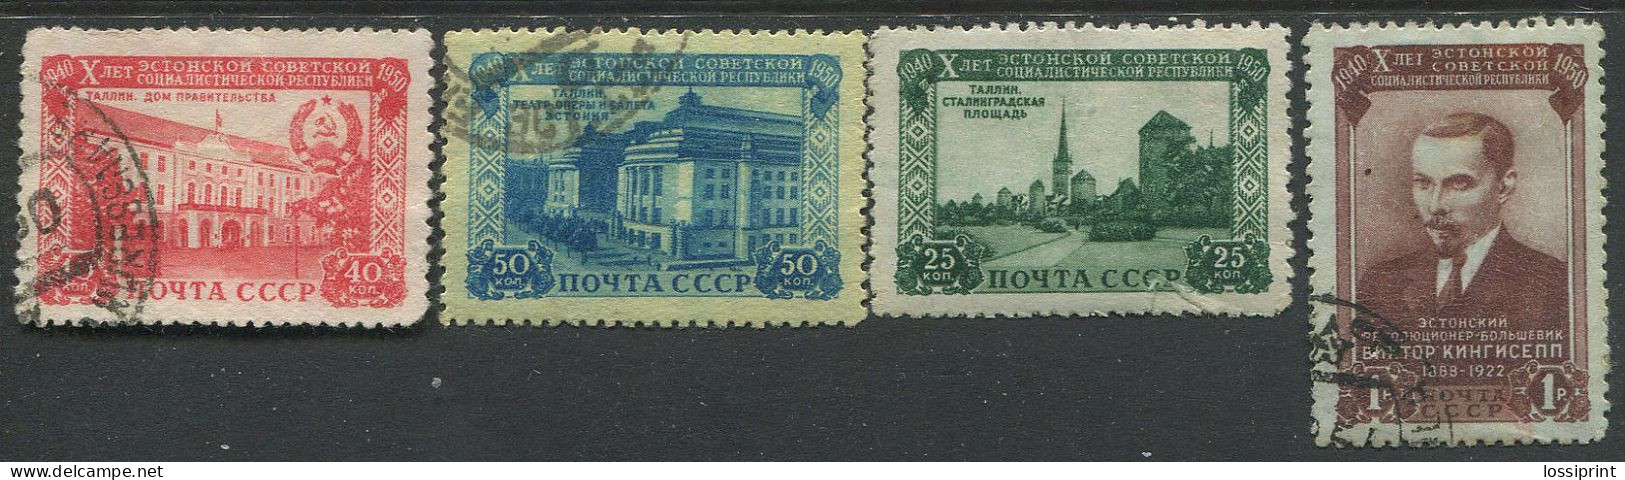 Russia:Estonia:Used Stamps Serie X Years Estonia, V.Kingissepp, Theatre, Street, 1950 - Used Stamps